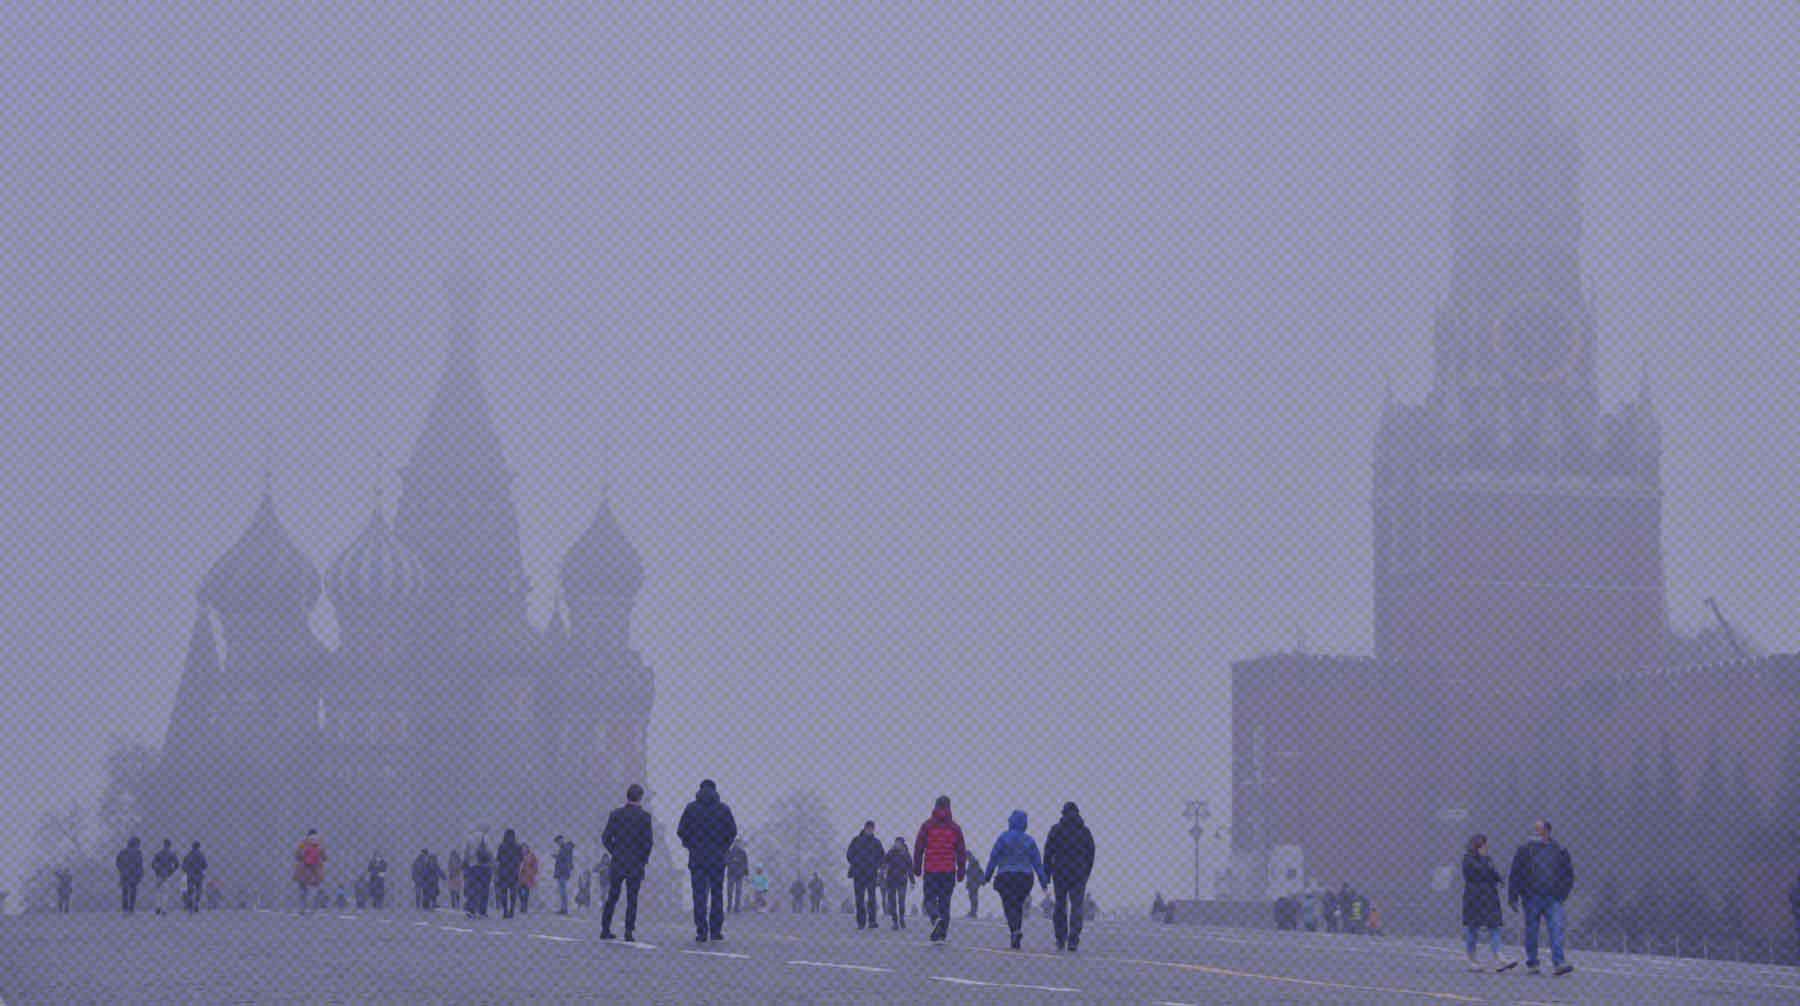 Dailystorm - Циклон Бенедикт накрыл города. Фото и видео из Петербурга, Крыма и Стамбула